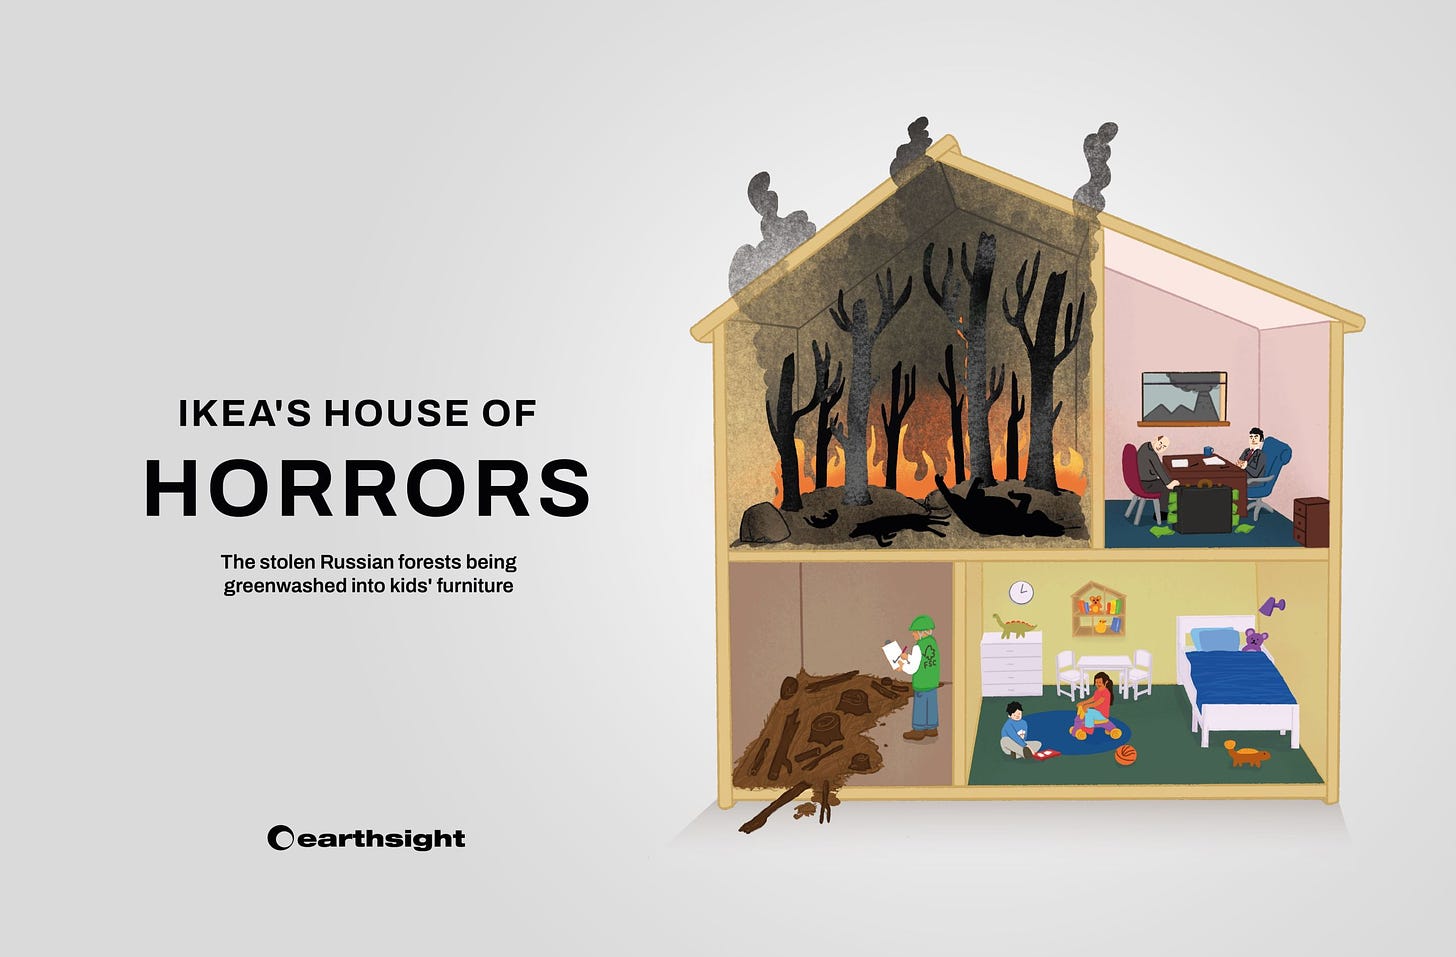 Ikea's House of Horrors